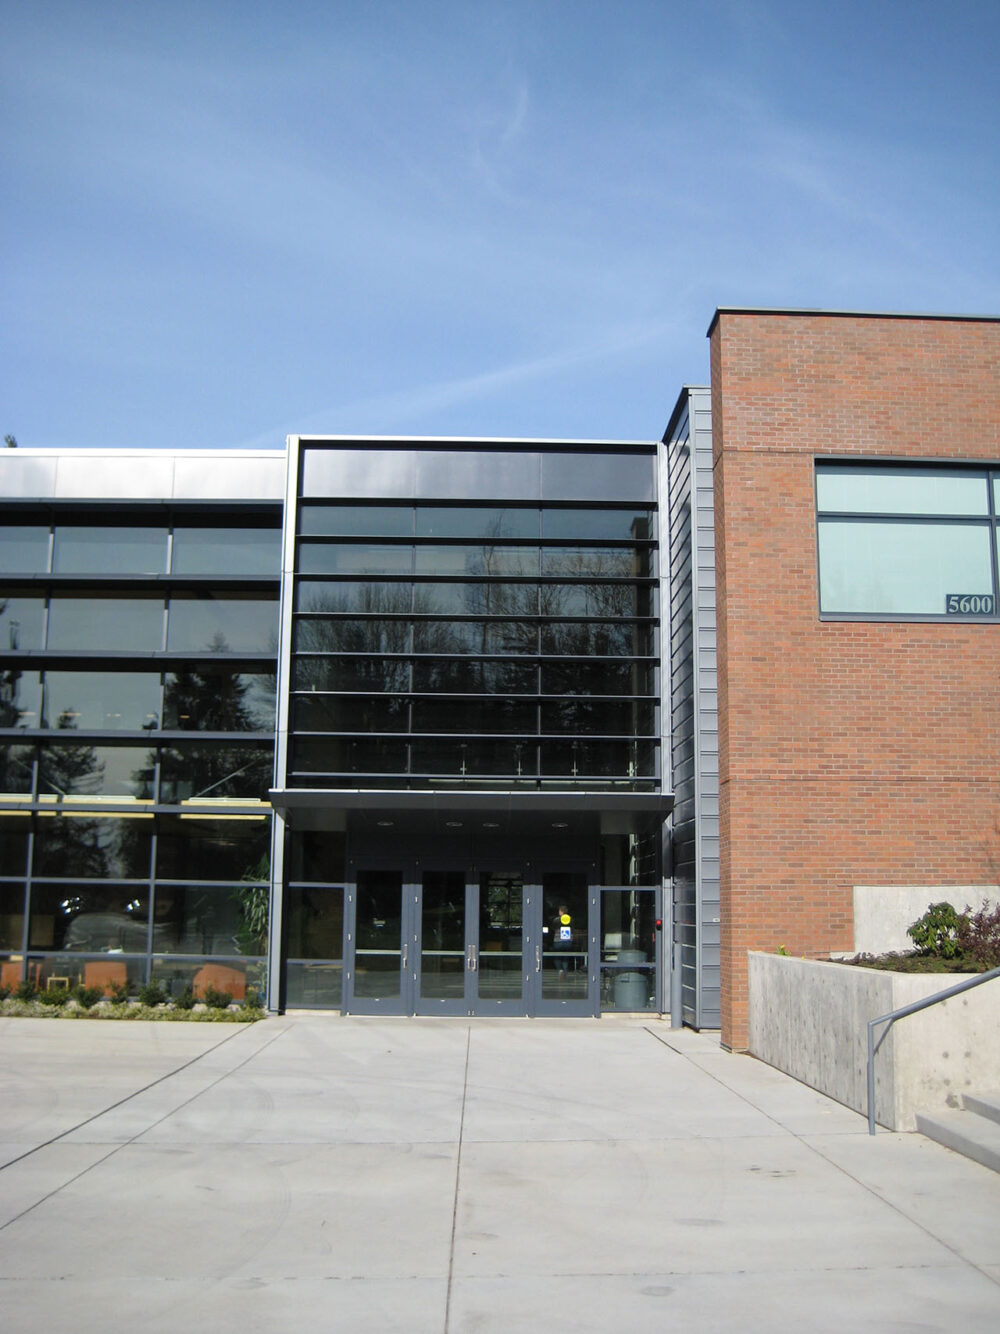 Northwest University Health and Sciences Center